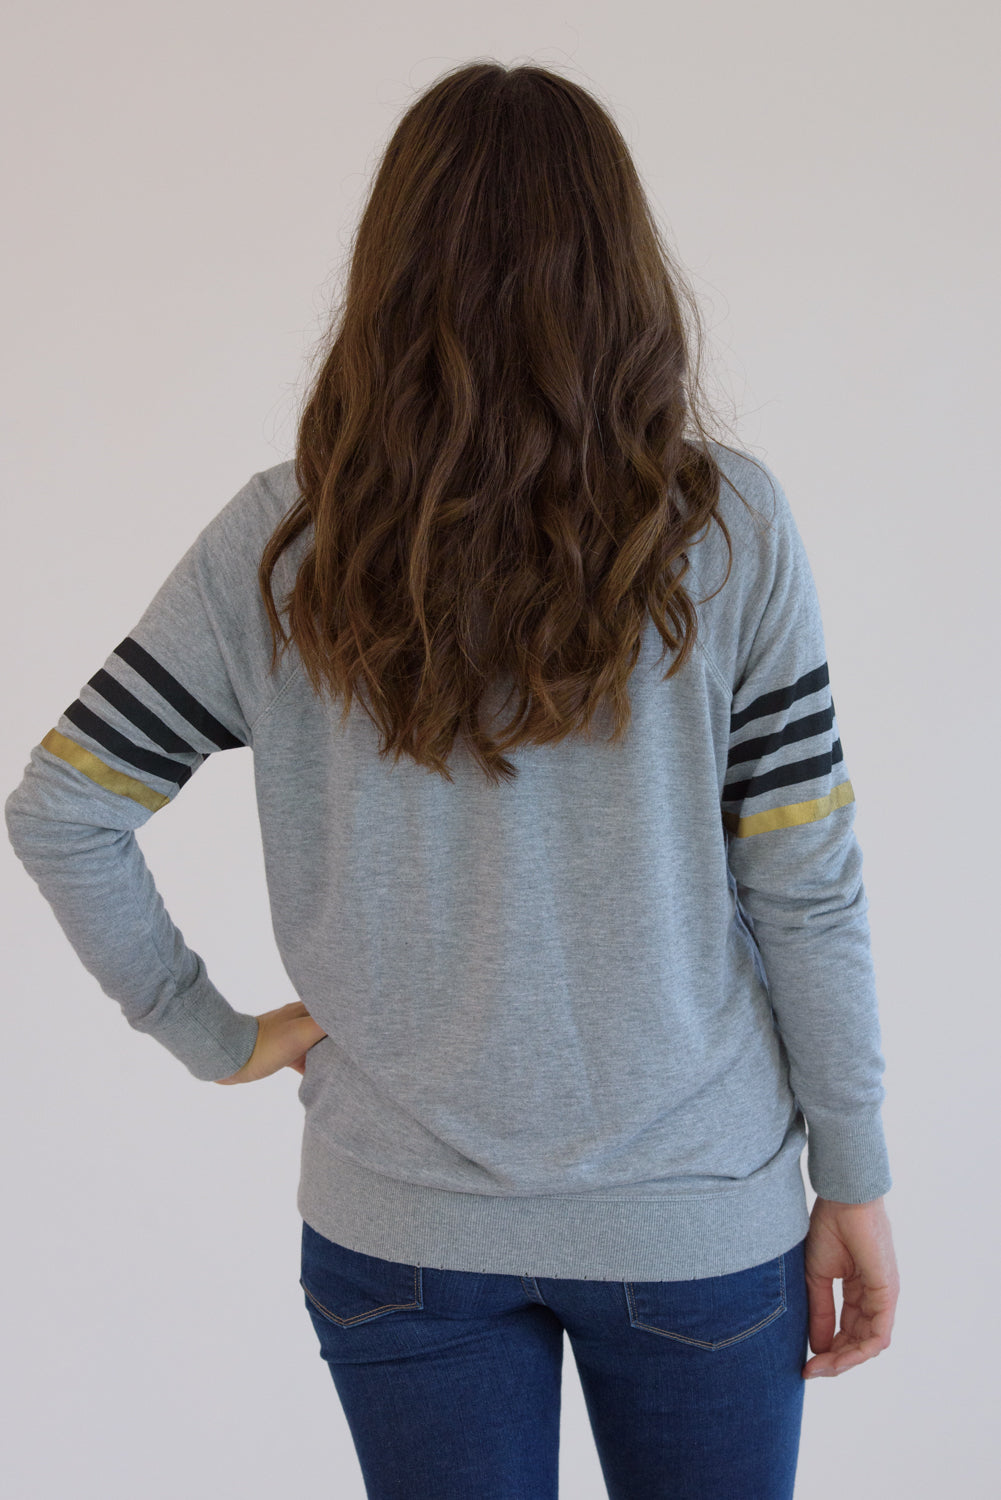 Heather Grey Distressed Black Star and Printed Stripes Sweatshirt